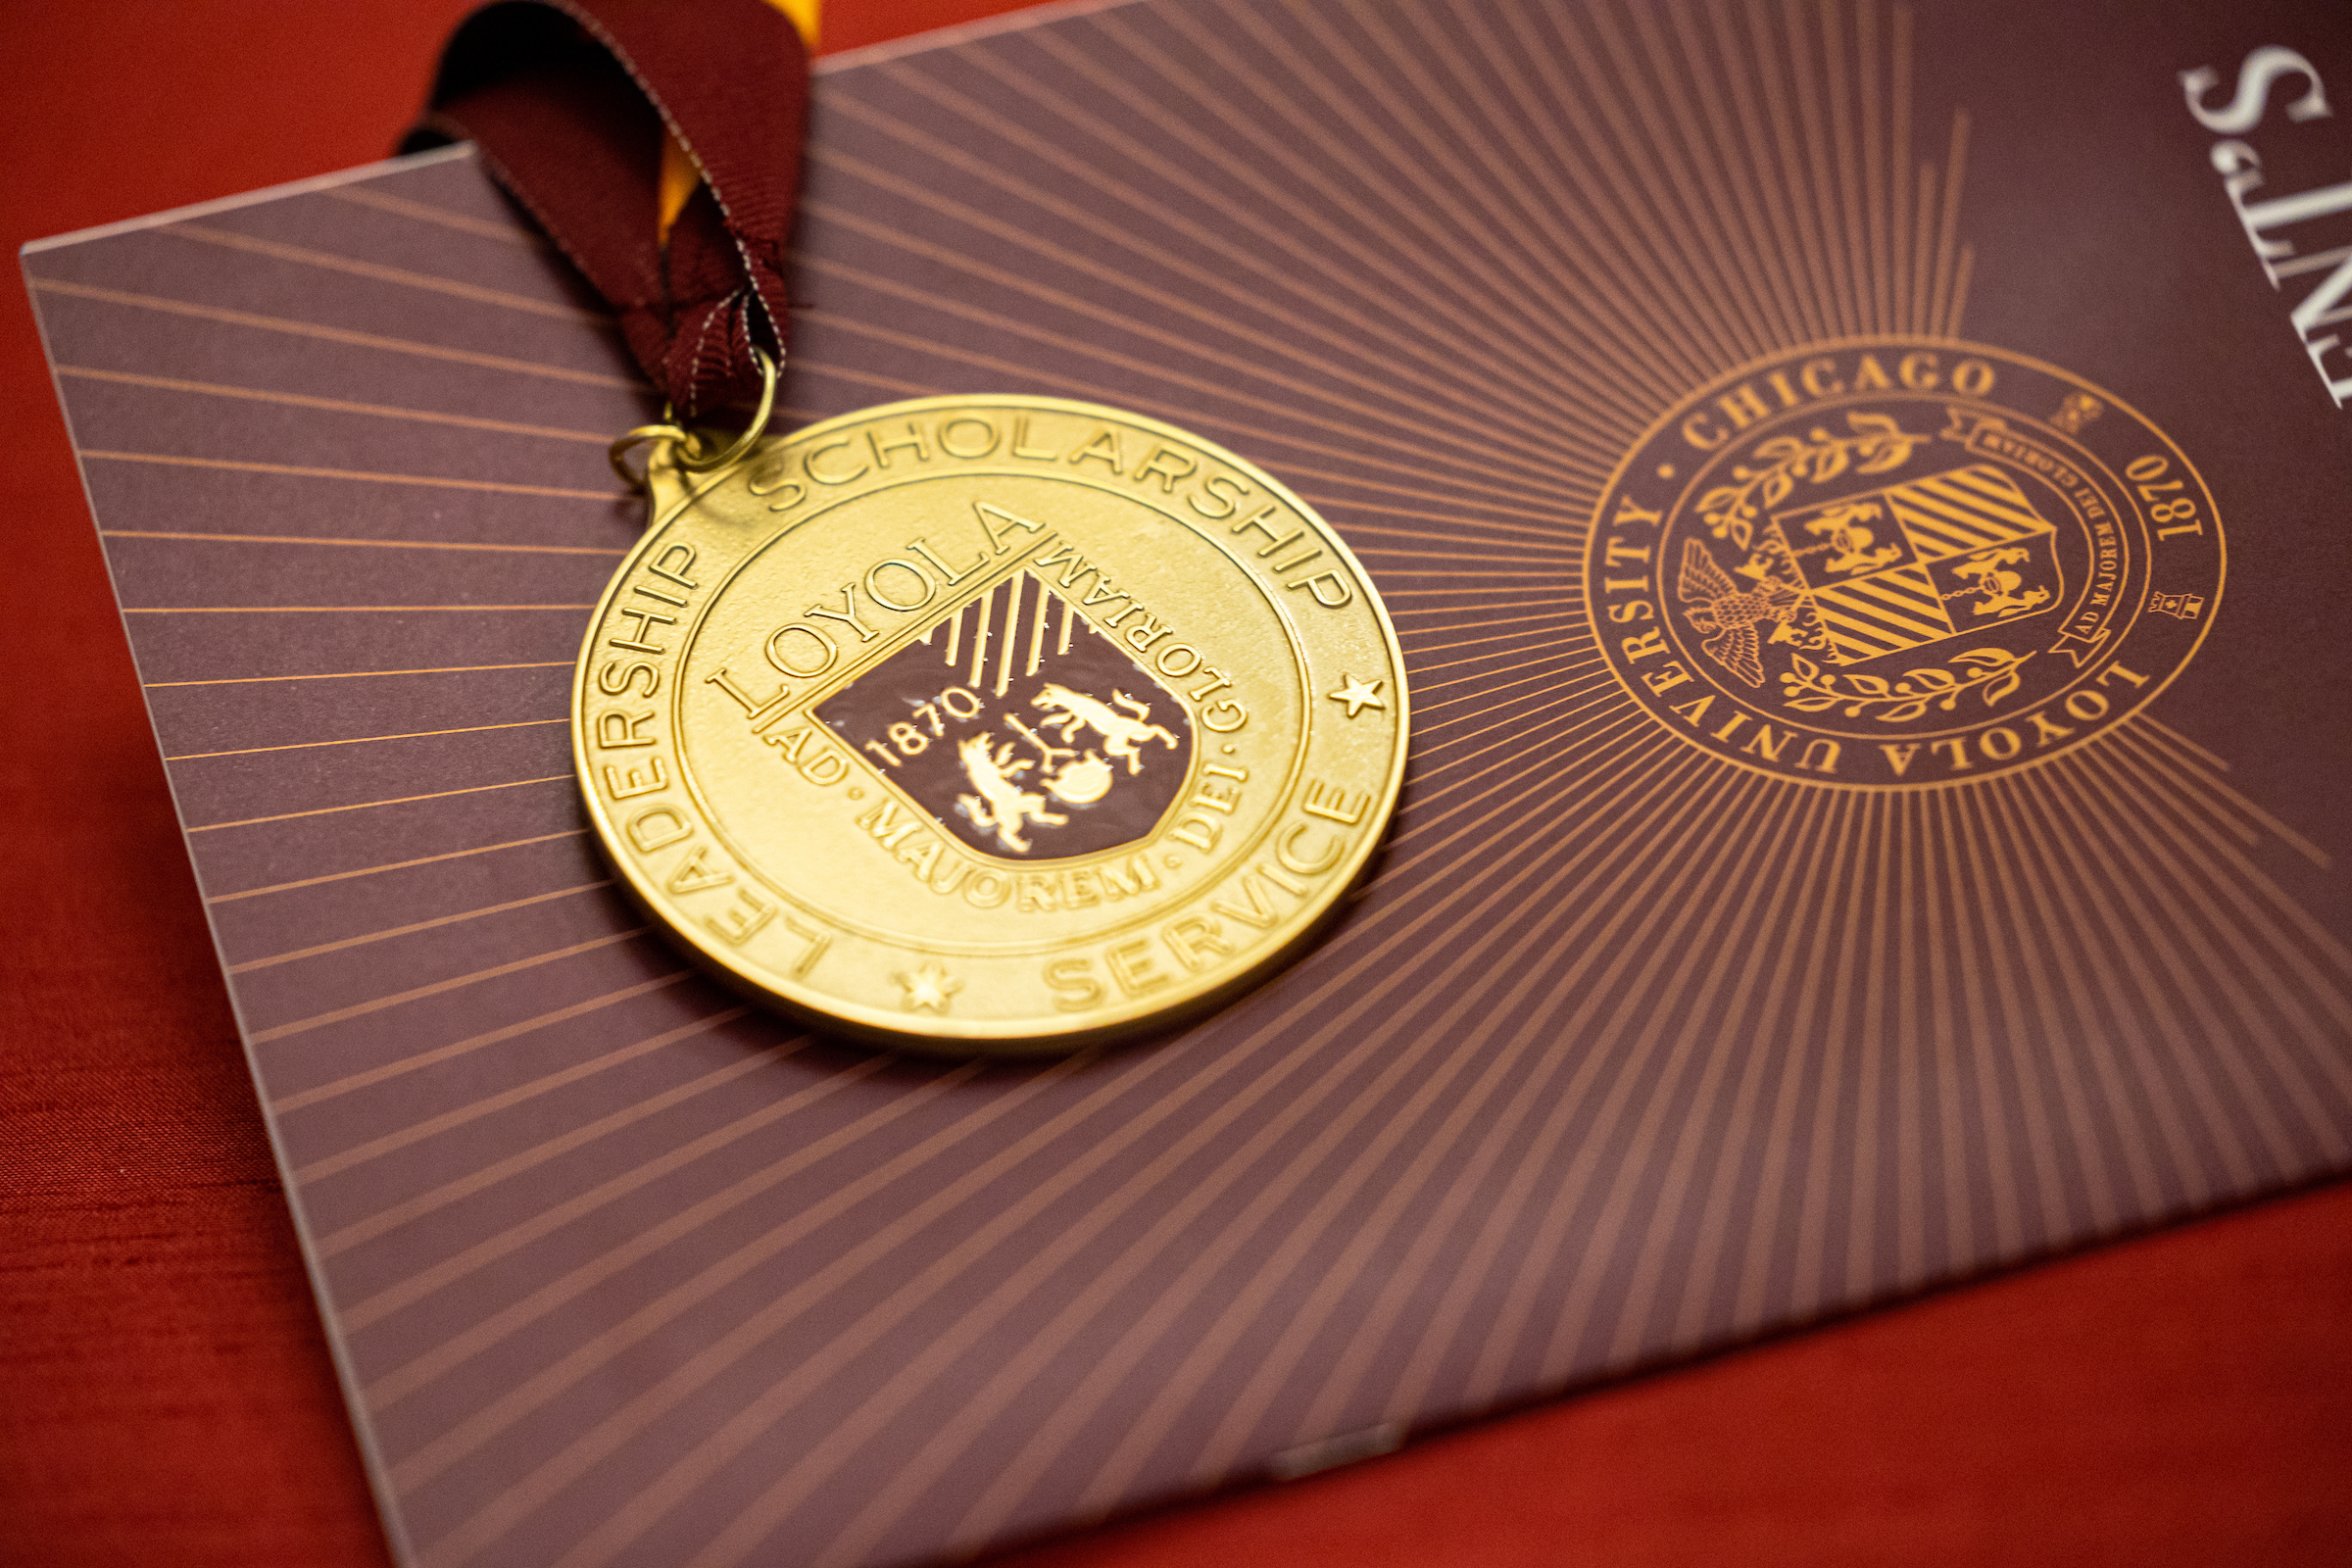 Loyola Chicago President's Medallion Awards